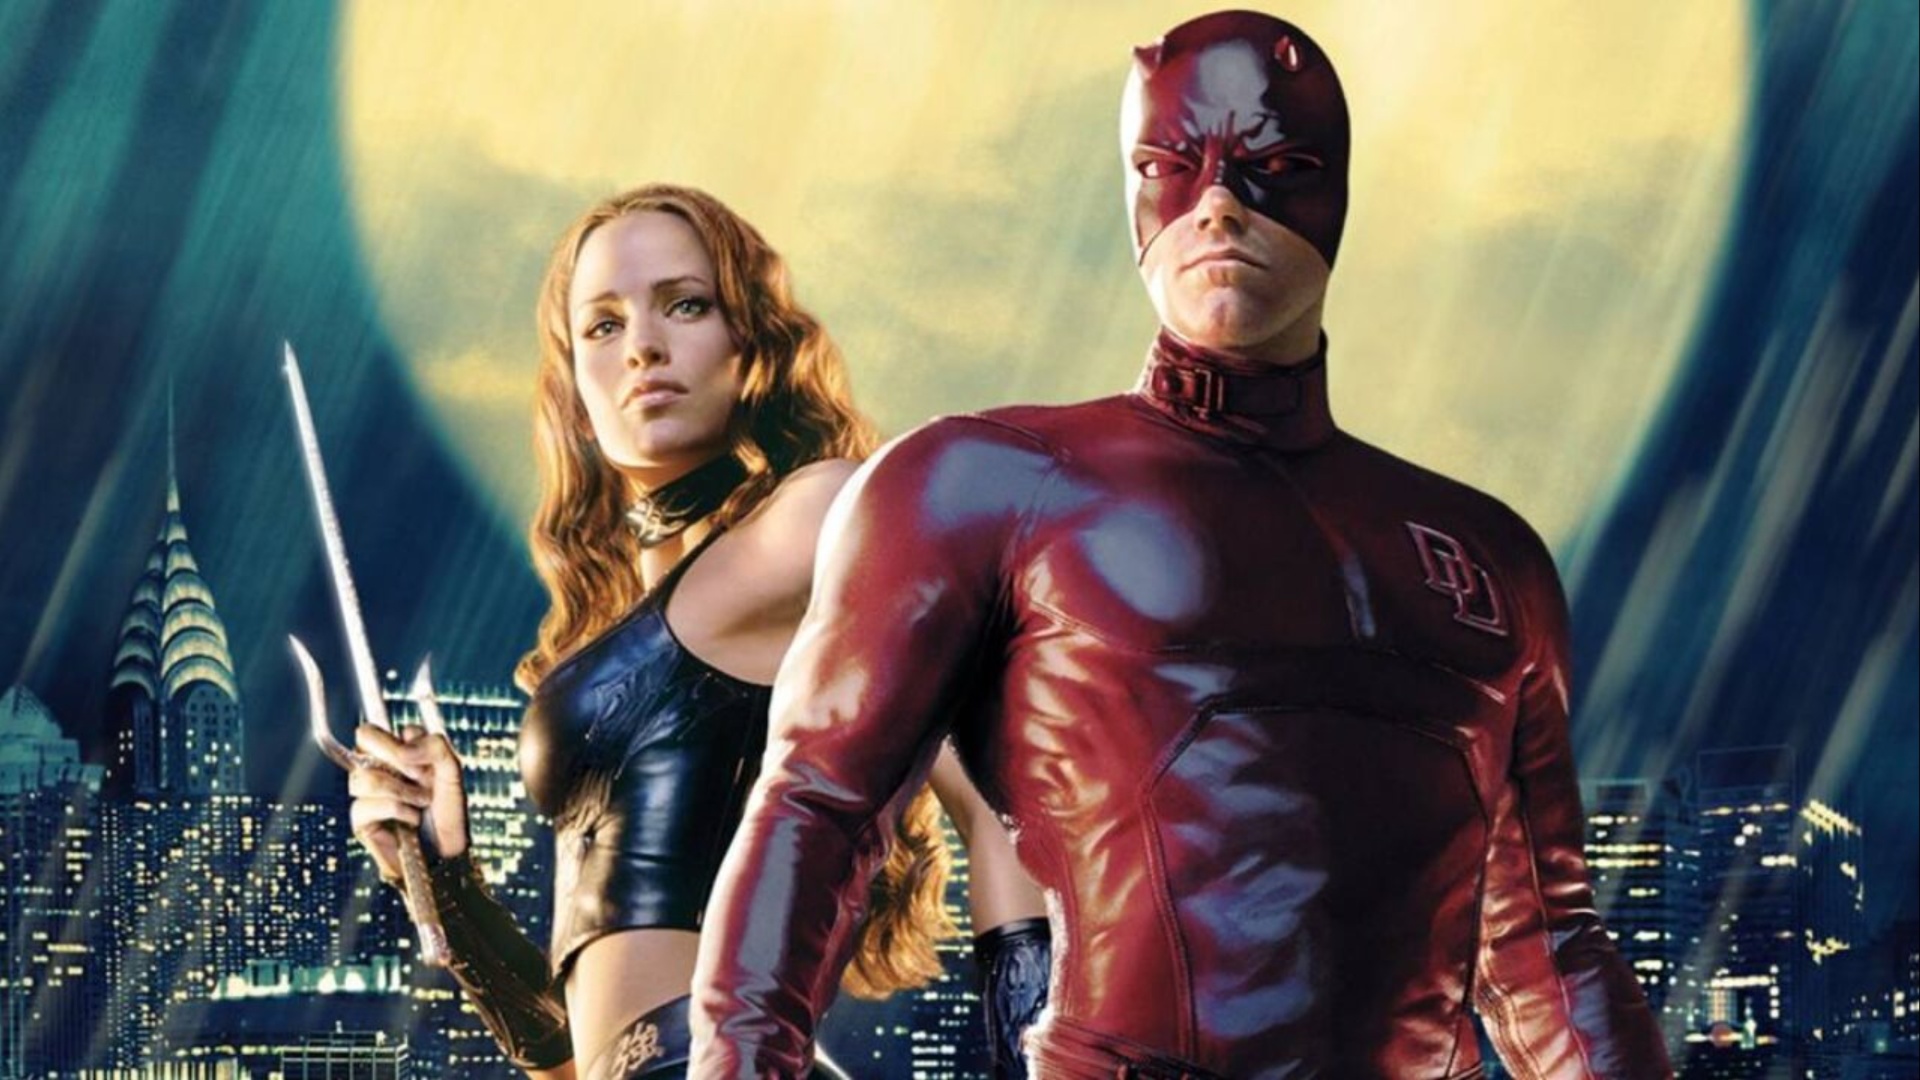 Deadpool 3: Elektra and Daredevil rumored casting - Is it true?